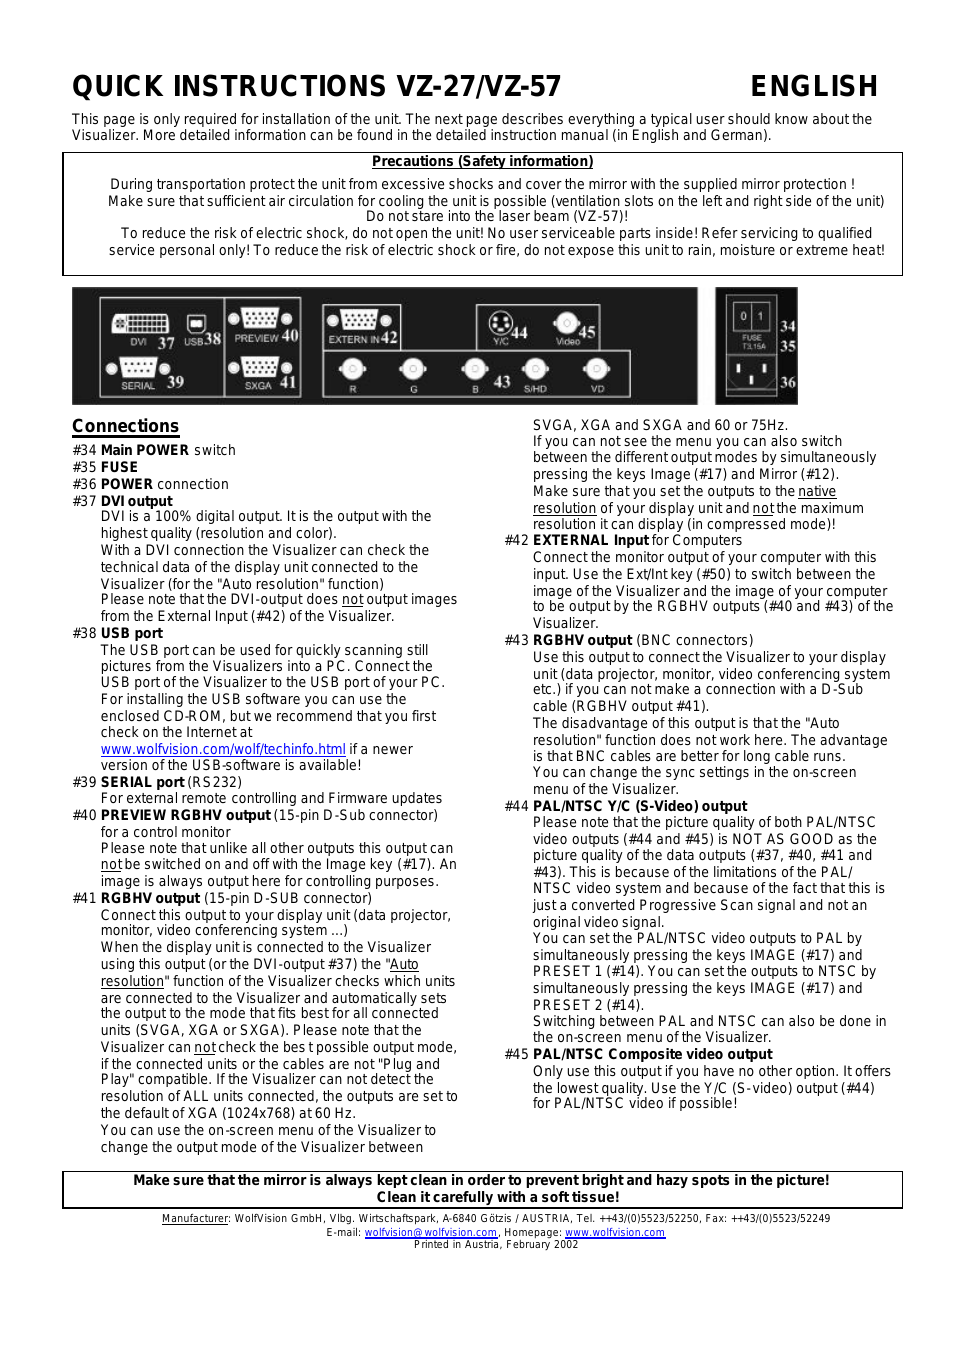 VZ-57 Short User Manual